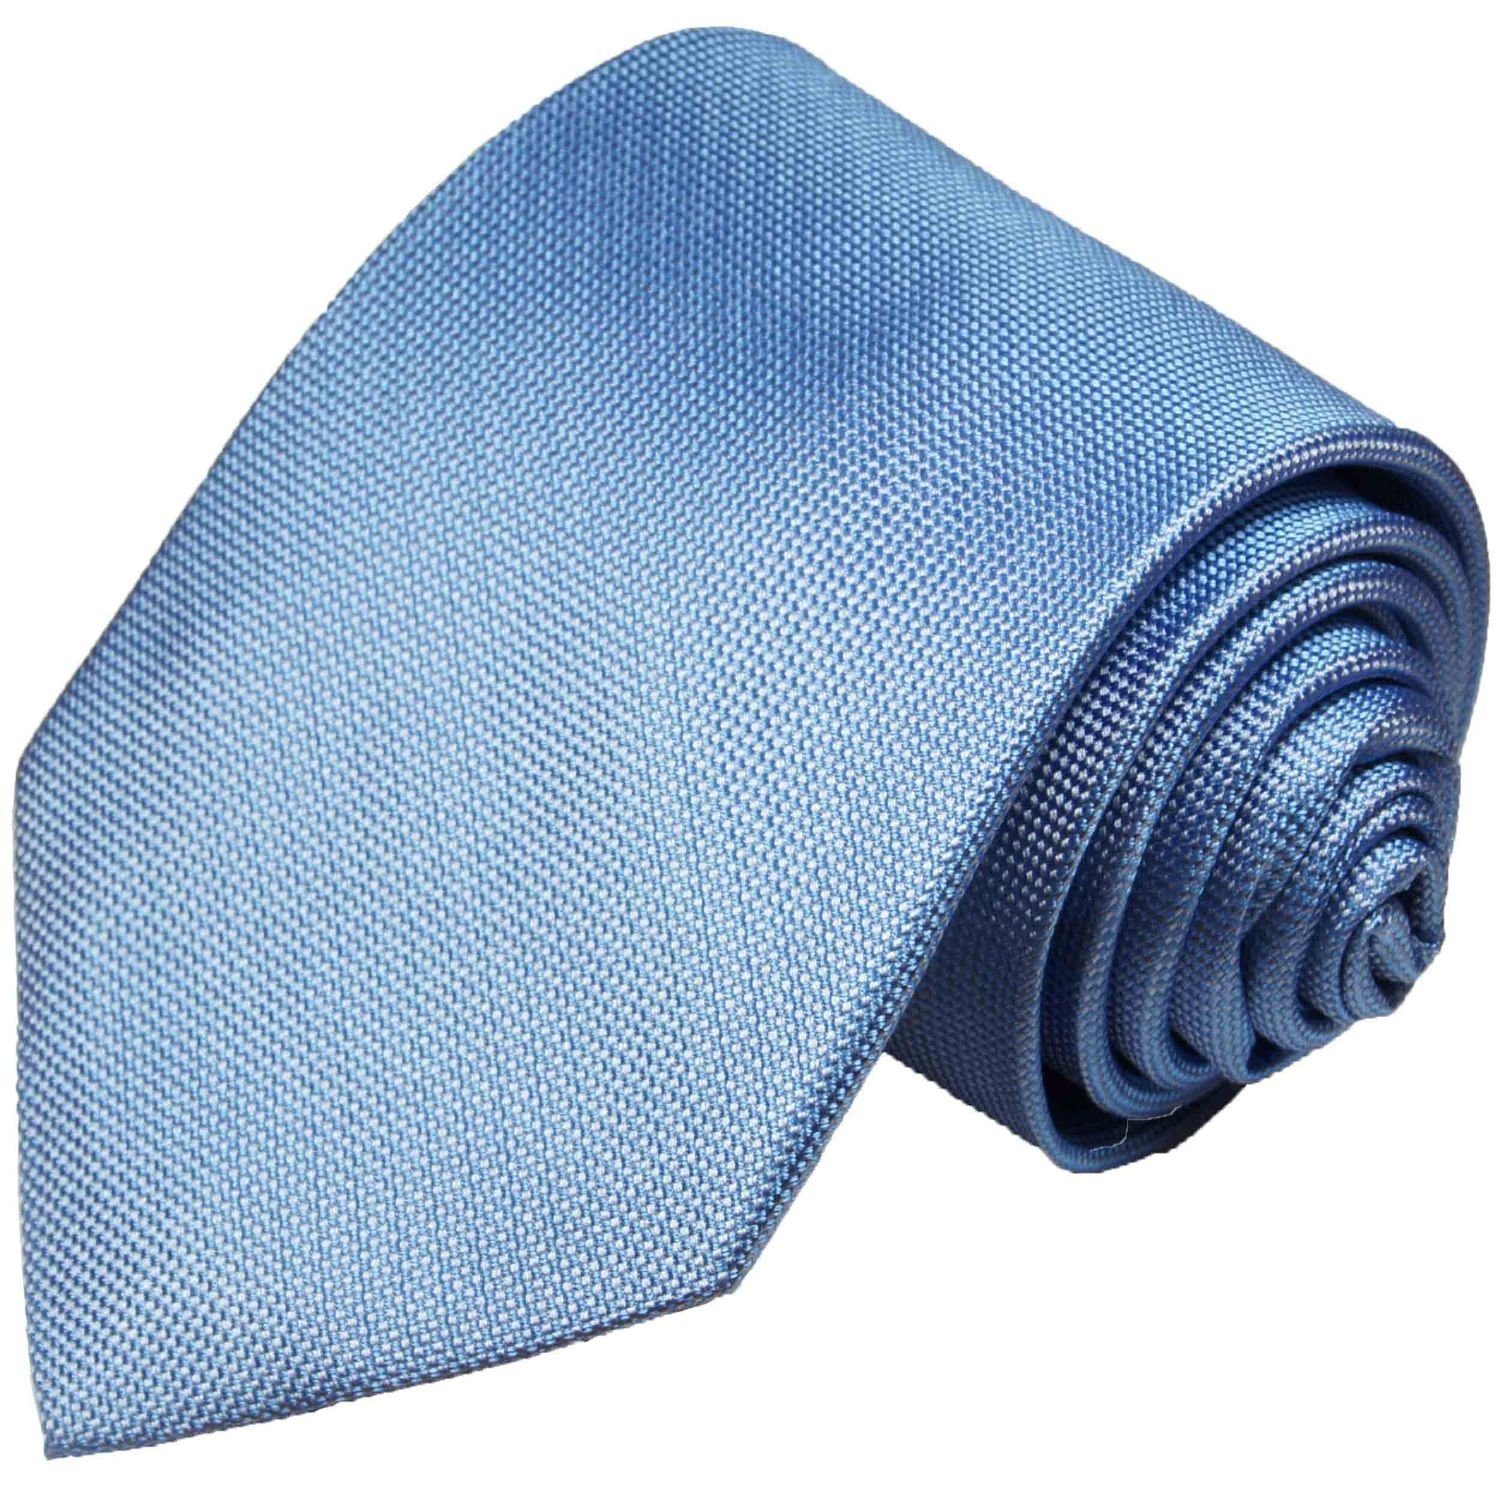 Paul Malone Krawatte Designer Seidenkrawatte Herren Schlips modern uni 100% Seide Schmal (6cm), blau 898